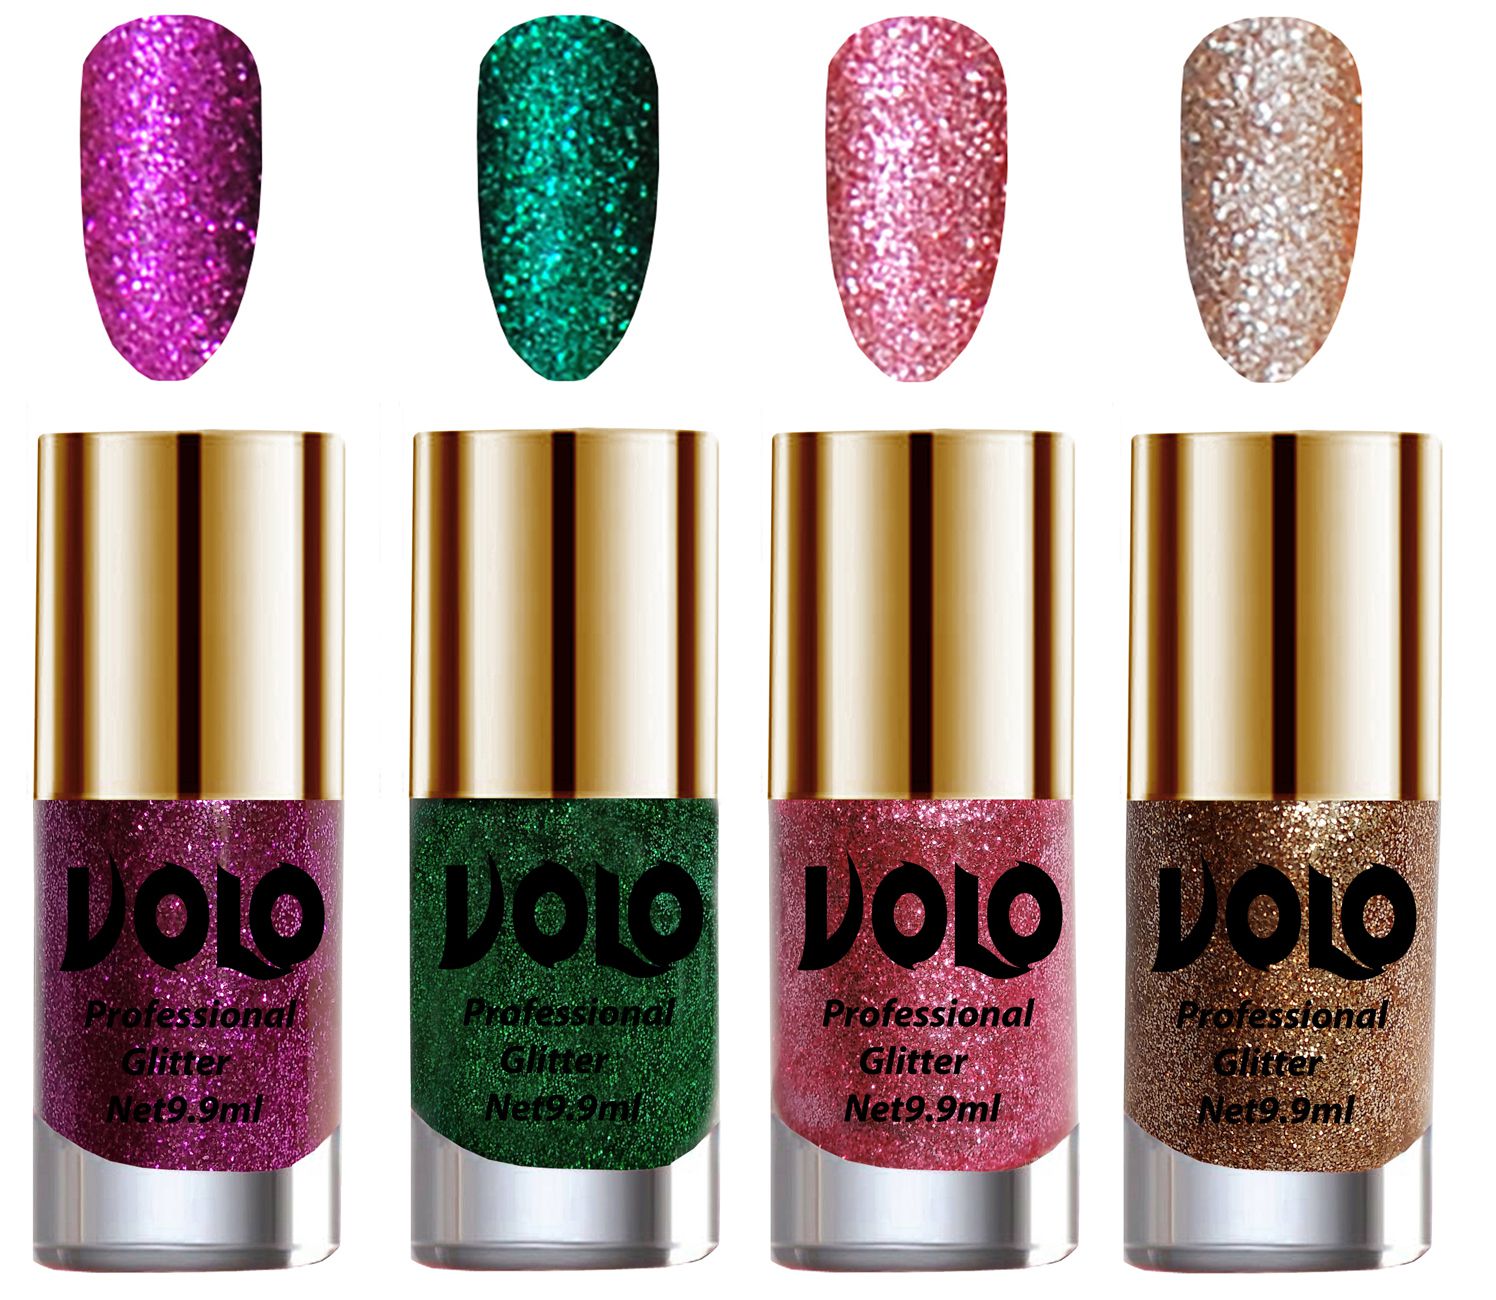     			VOLO Professionally Used Glitter Shine Nail Polish Purple,Green,Pink Gold Pack of 4 39 mL